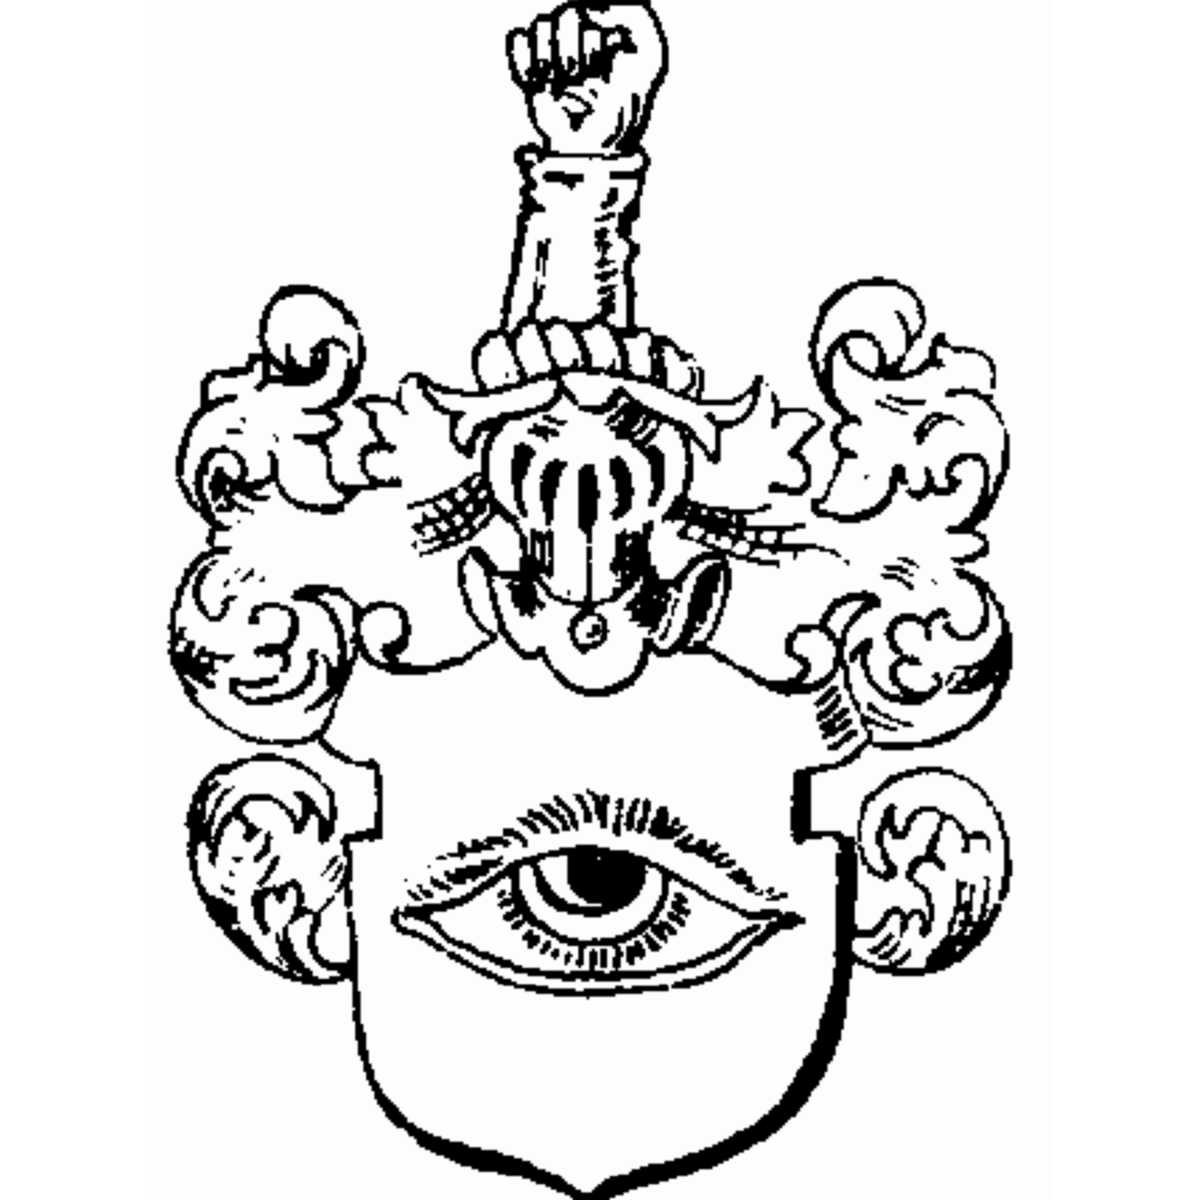 Wappen der Familie Lidbergh